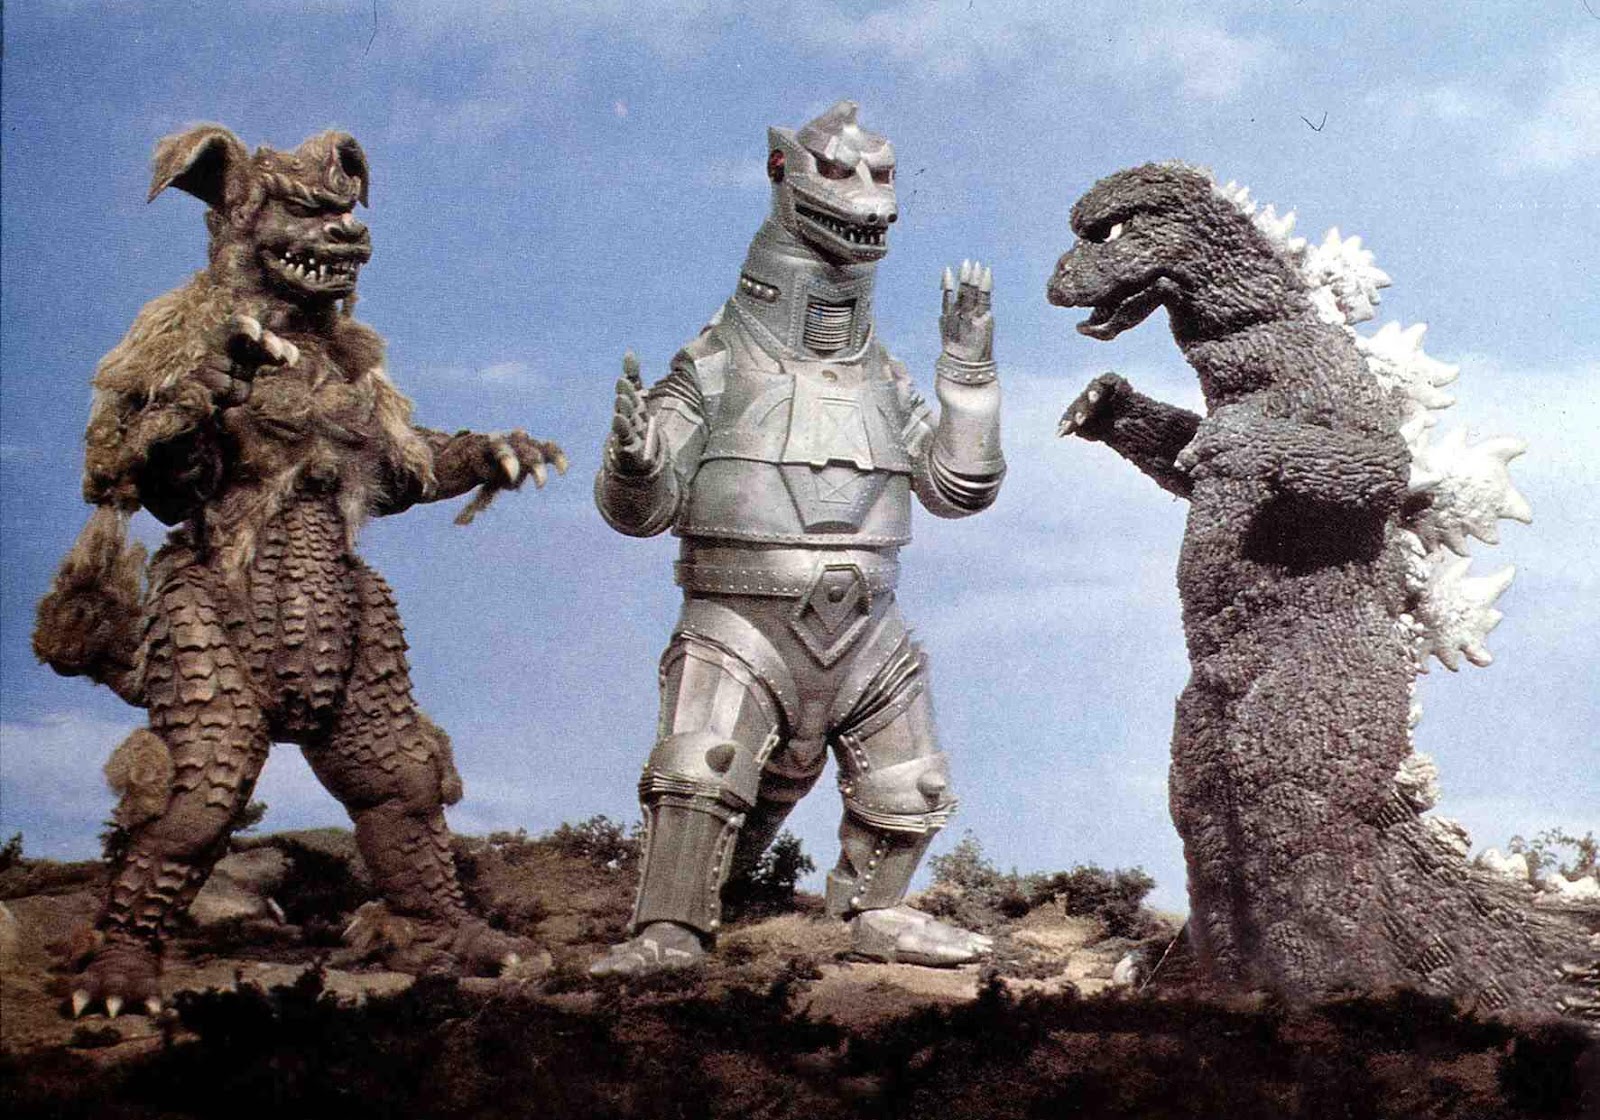 Godzilla Enemies